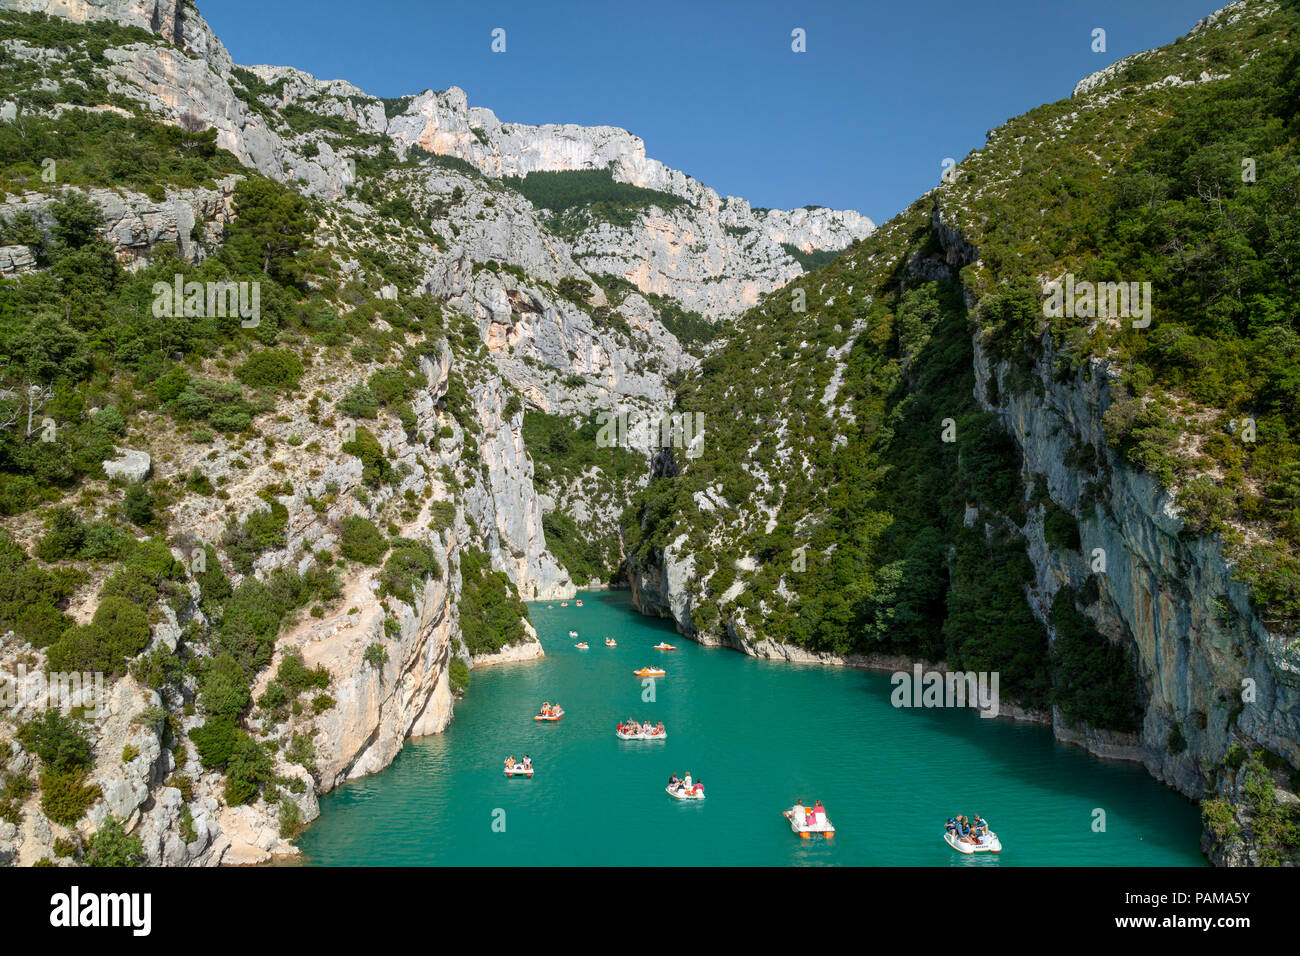 Bootfahren in der Gorges du Verdon, Alpes de Haute Provence, Frankreich Stockfoto